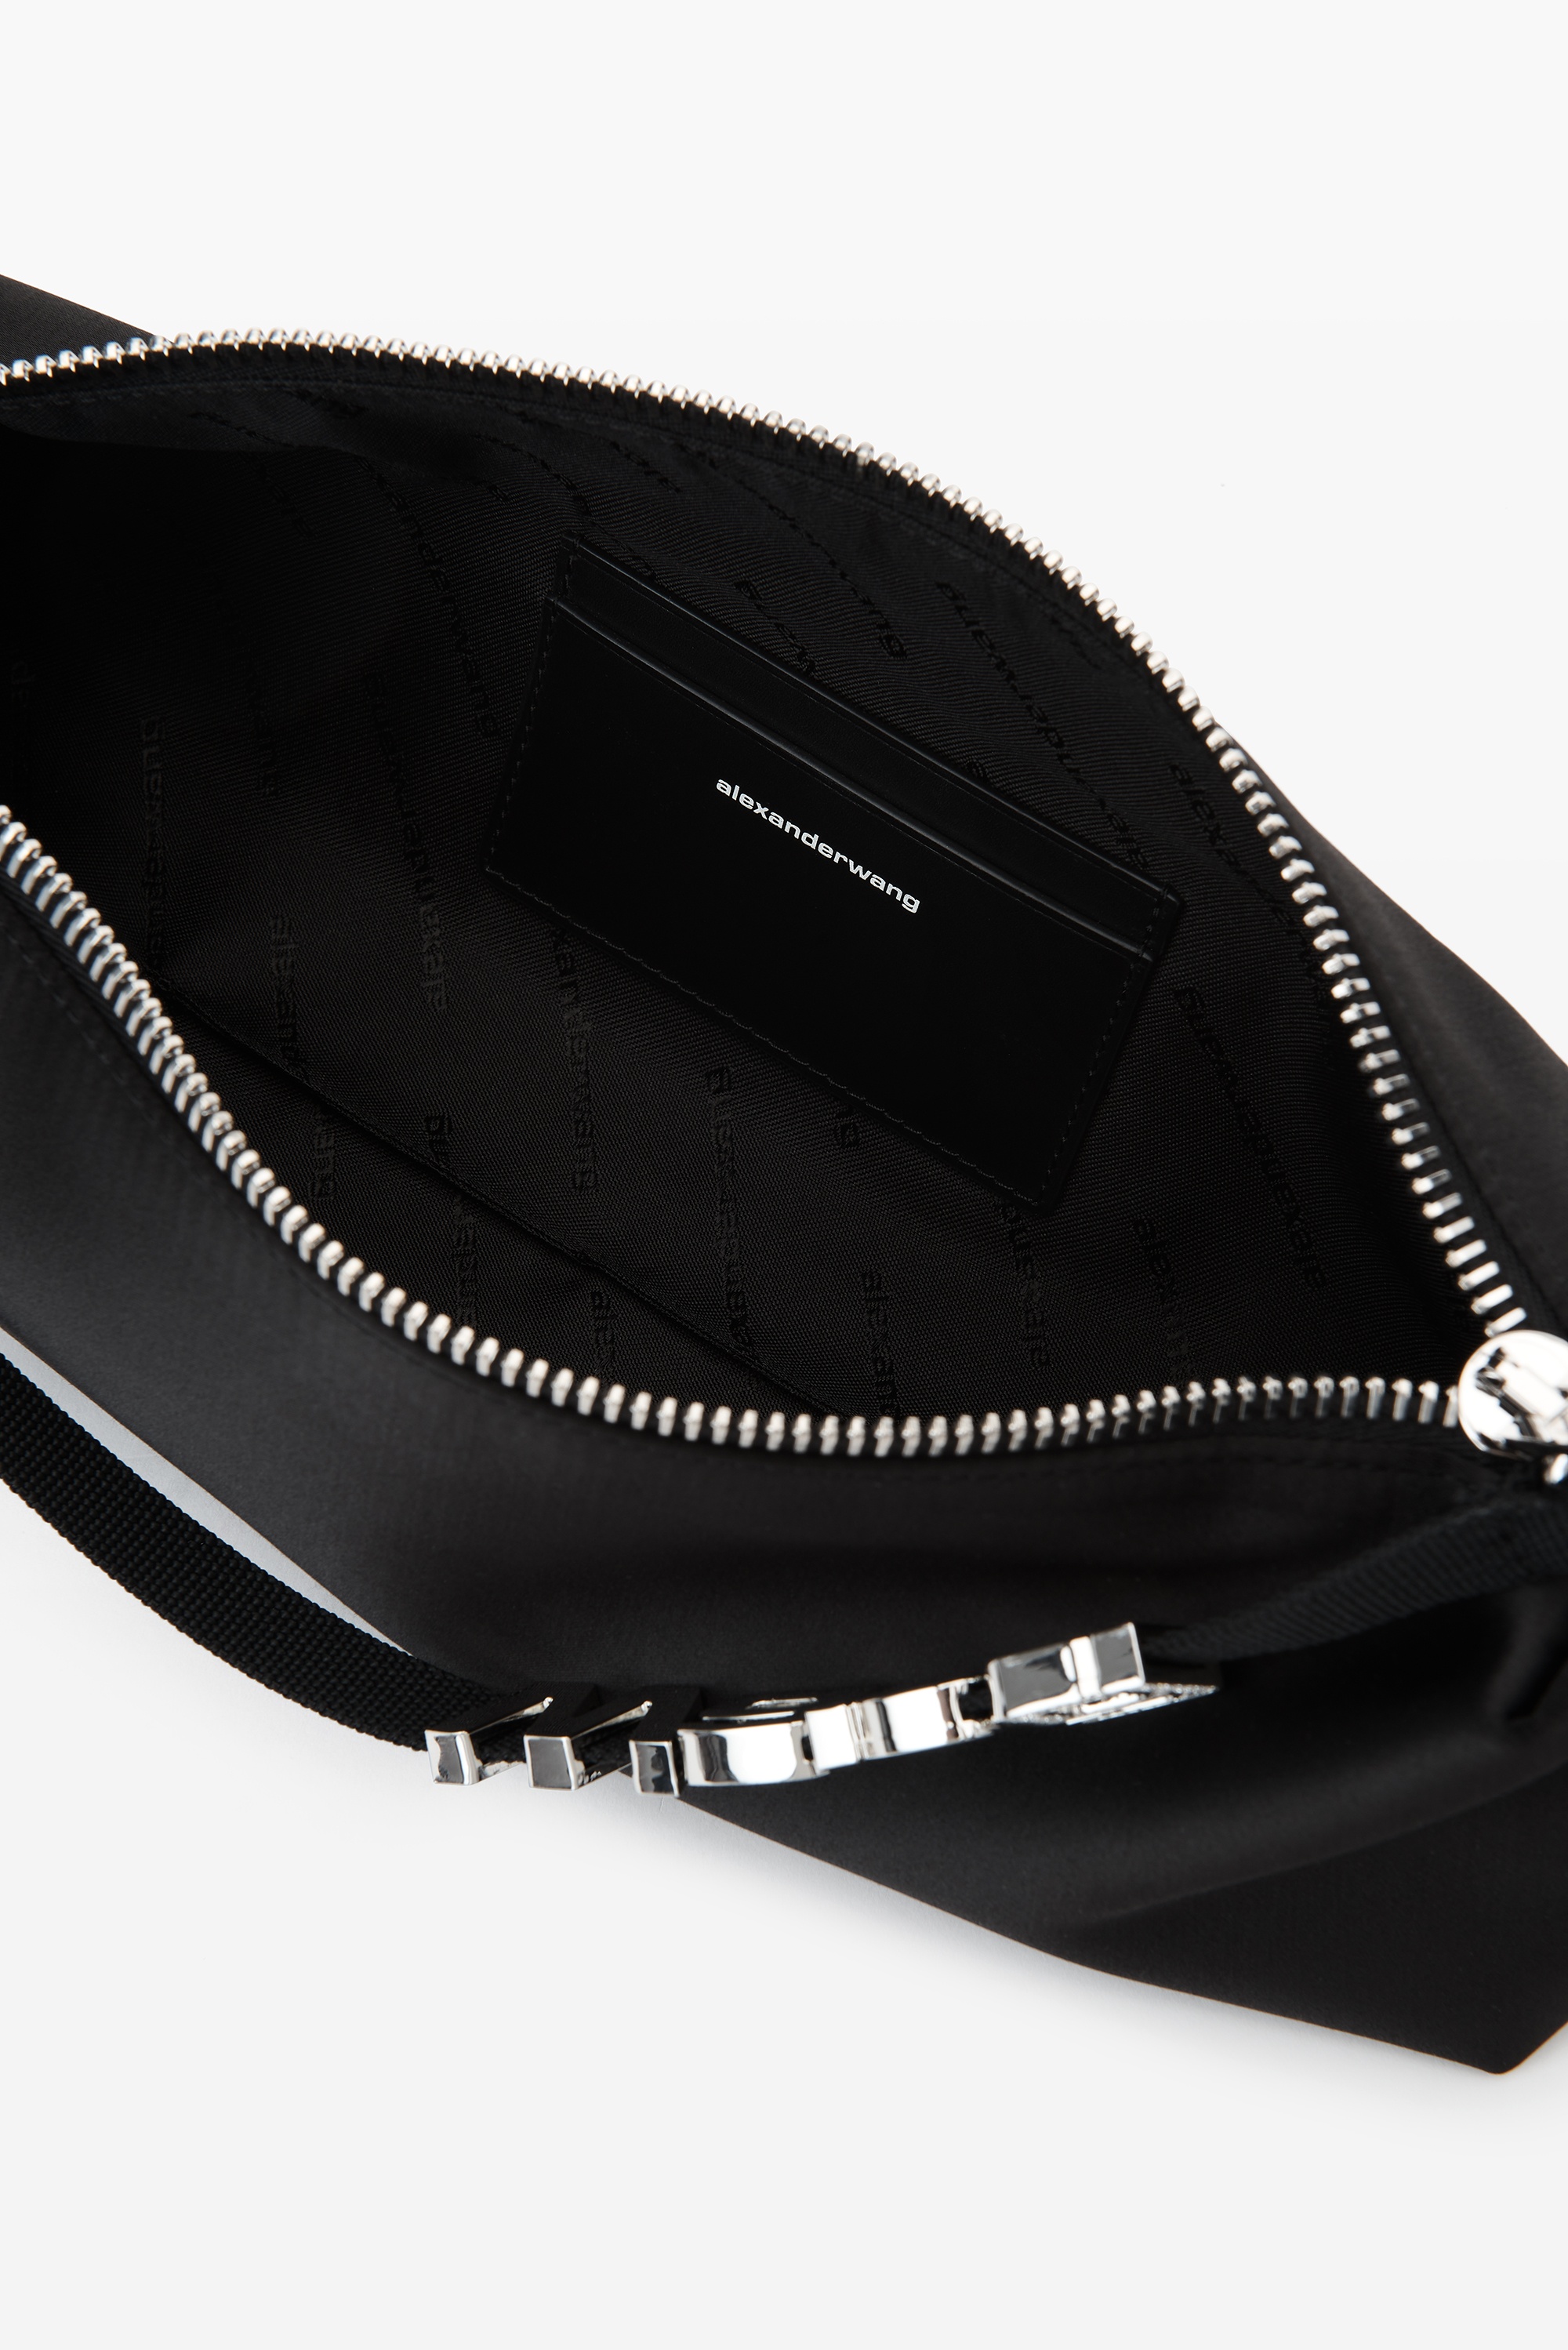 heiress flex bag in satin with crystal-embellished charms - 5